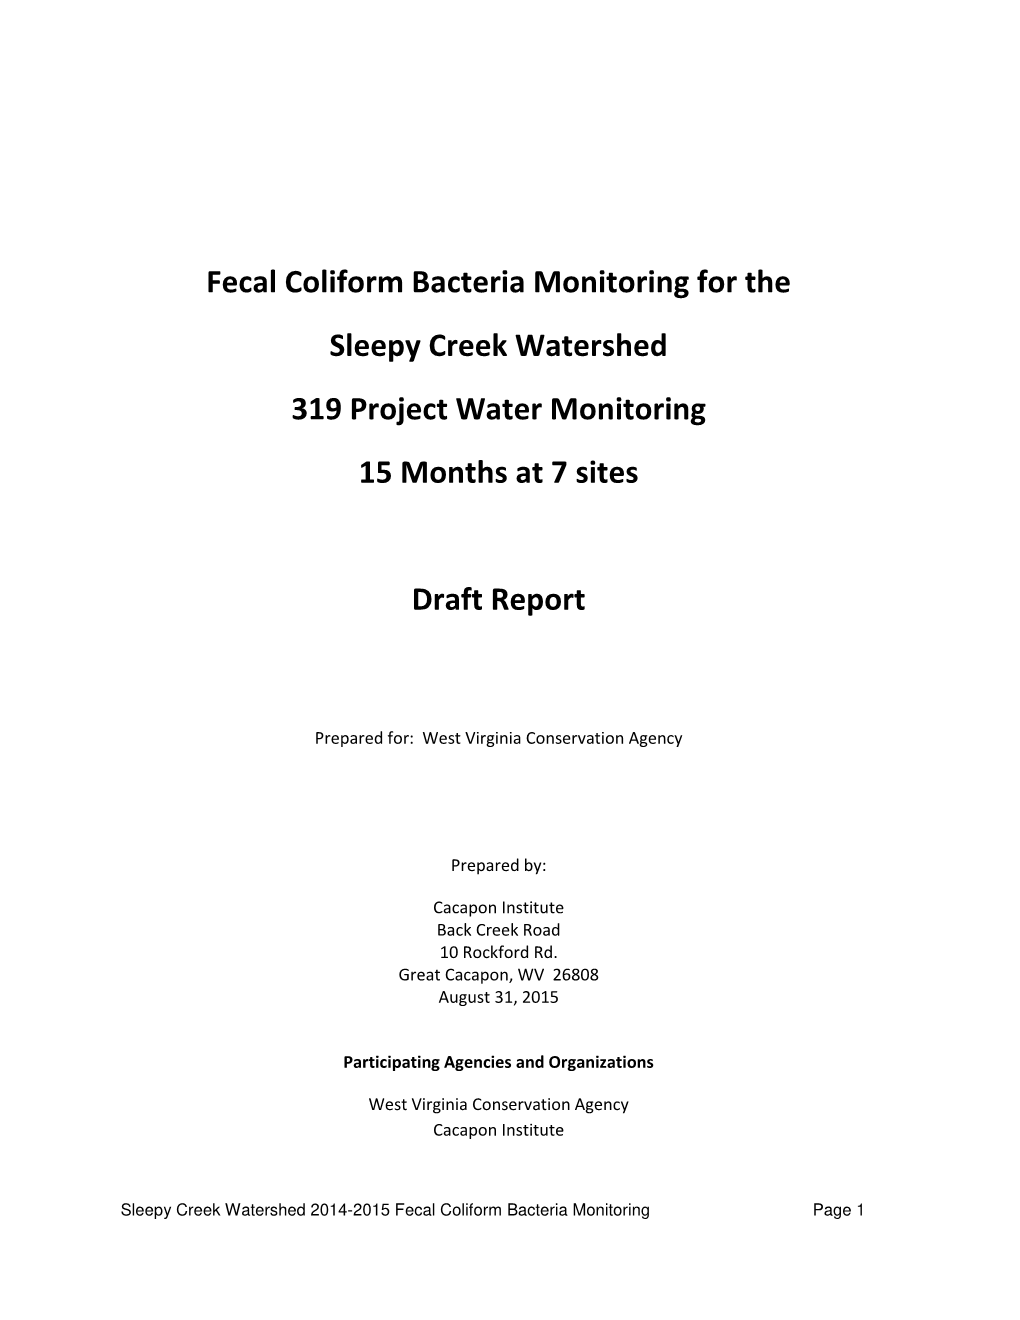 Sleepy Creek Fecal Coliform Bacteria Monitoring 2014-2015